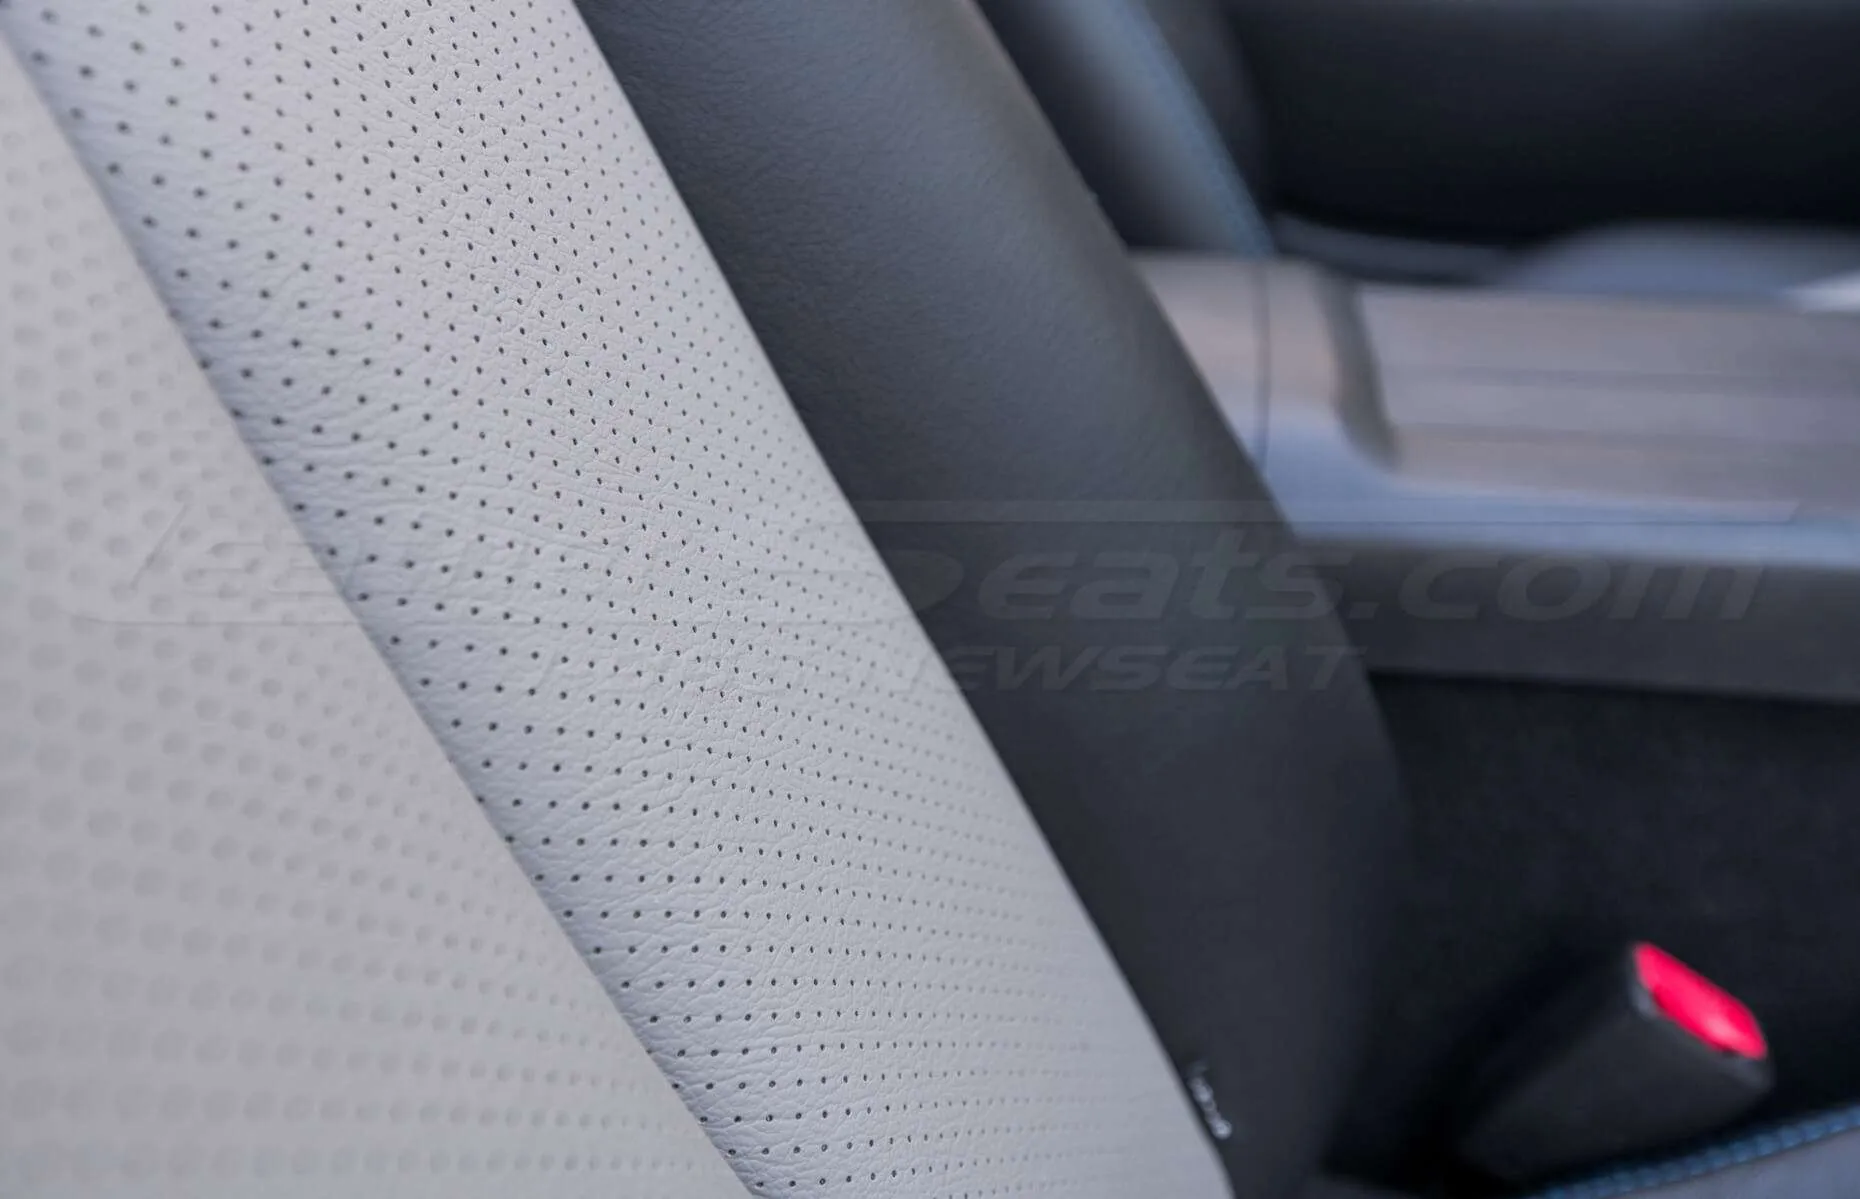 2006-2009 Mazda Miata Leather Seats - Perforated backrest